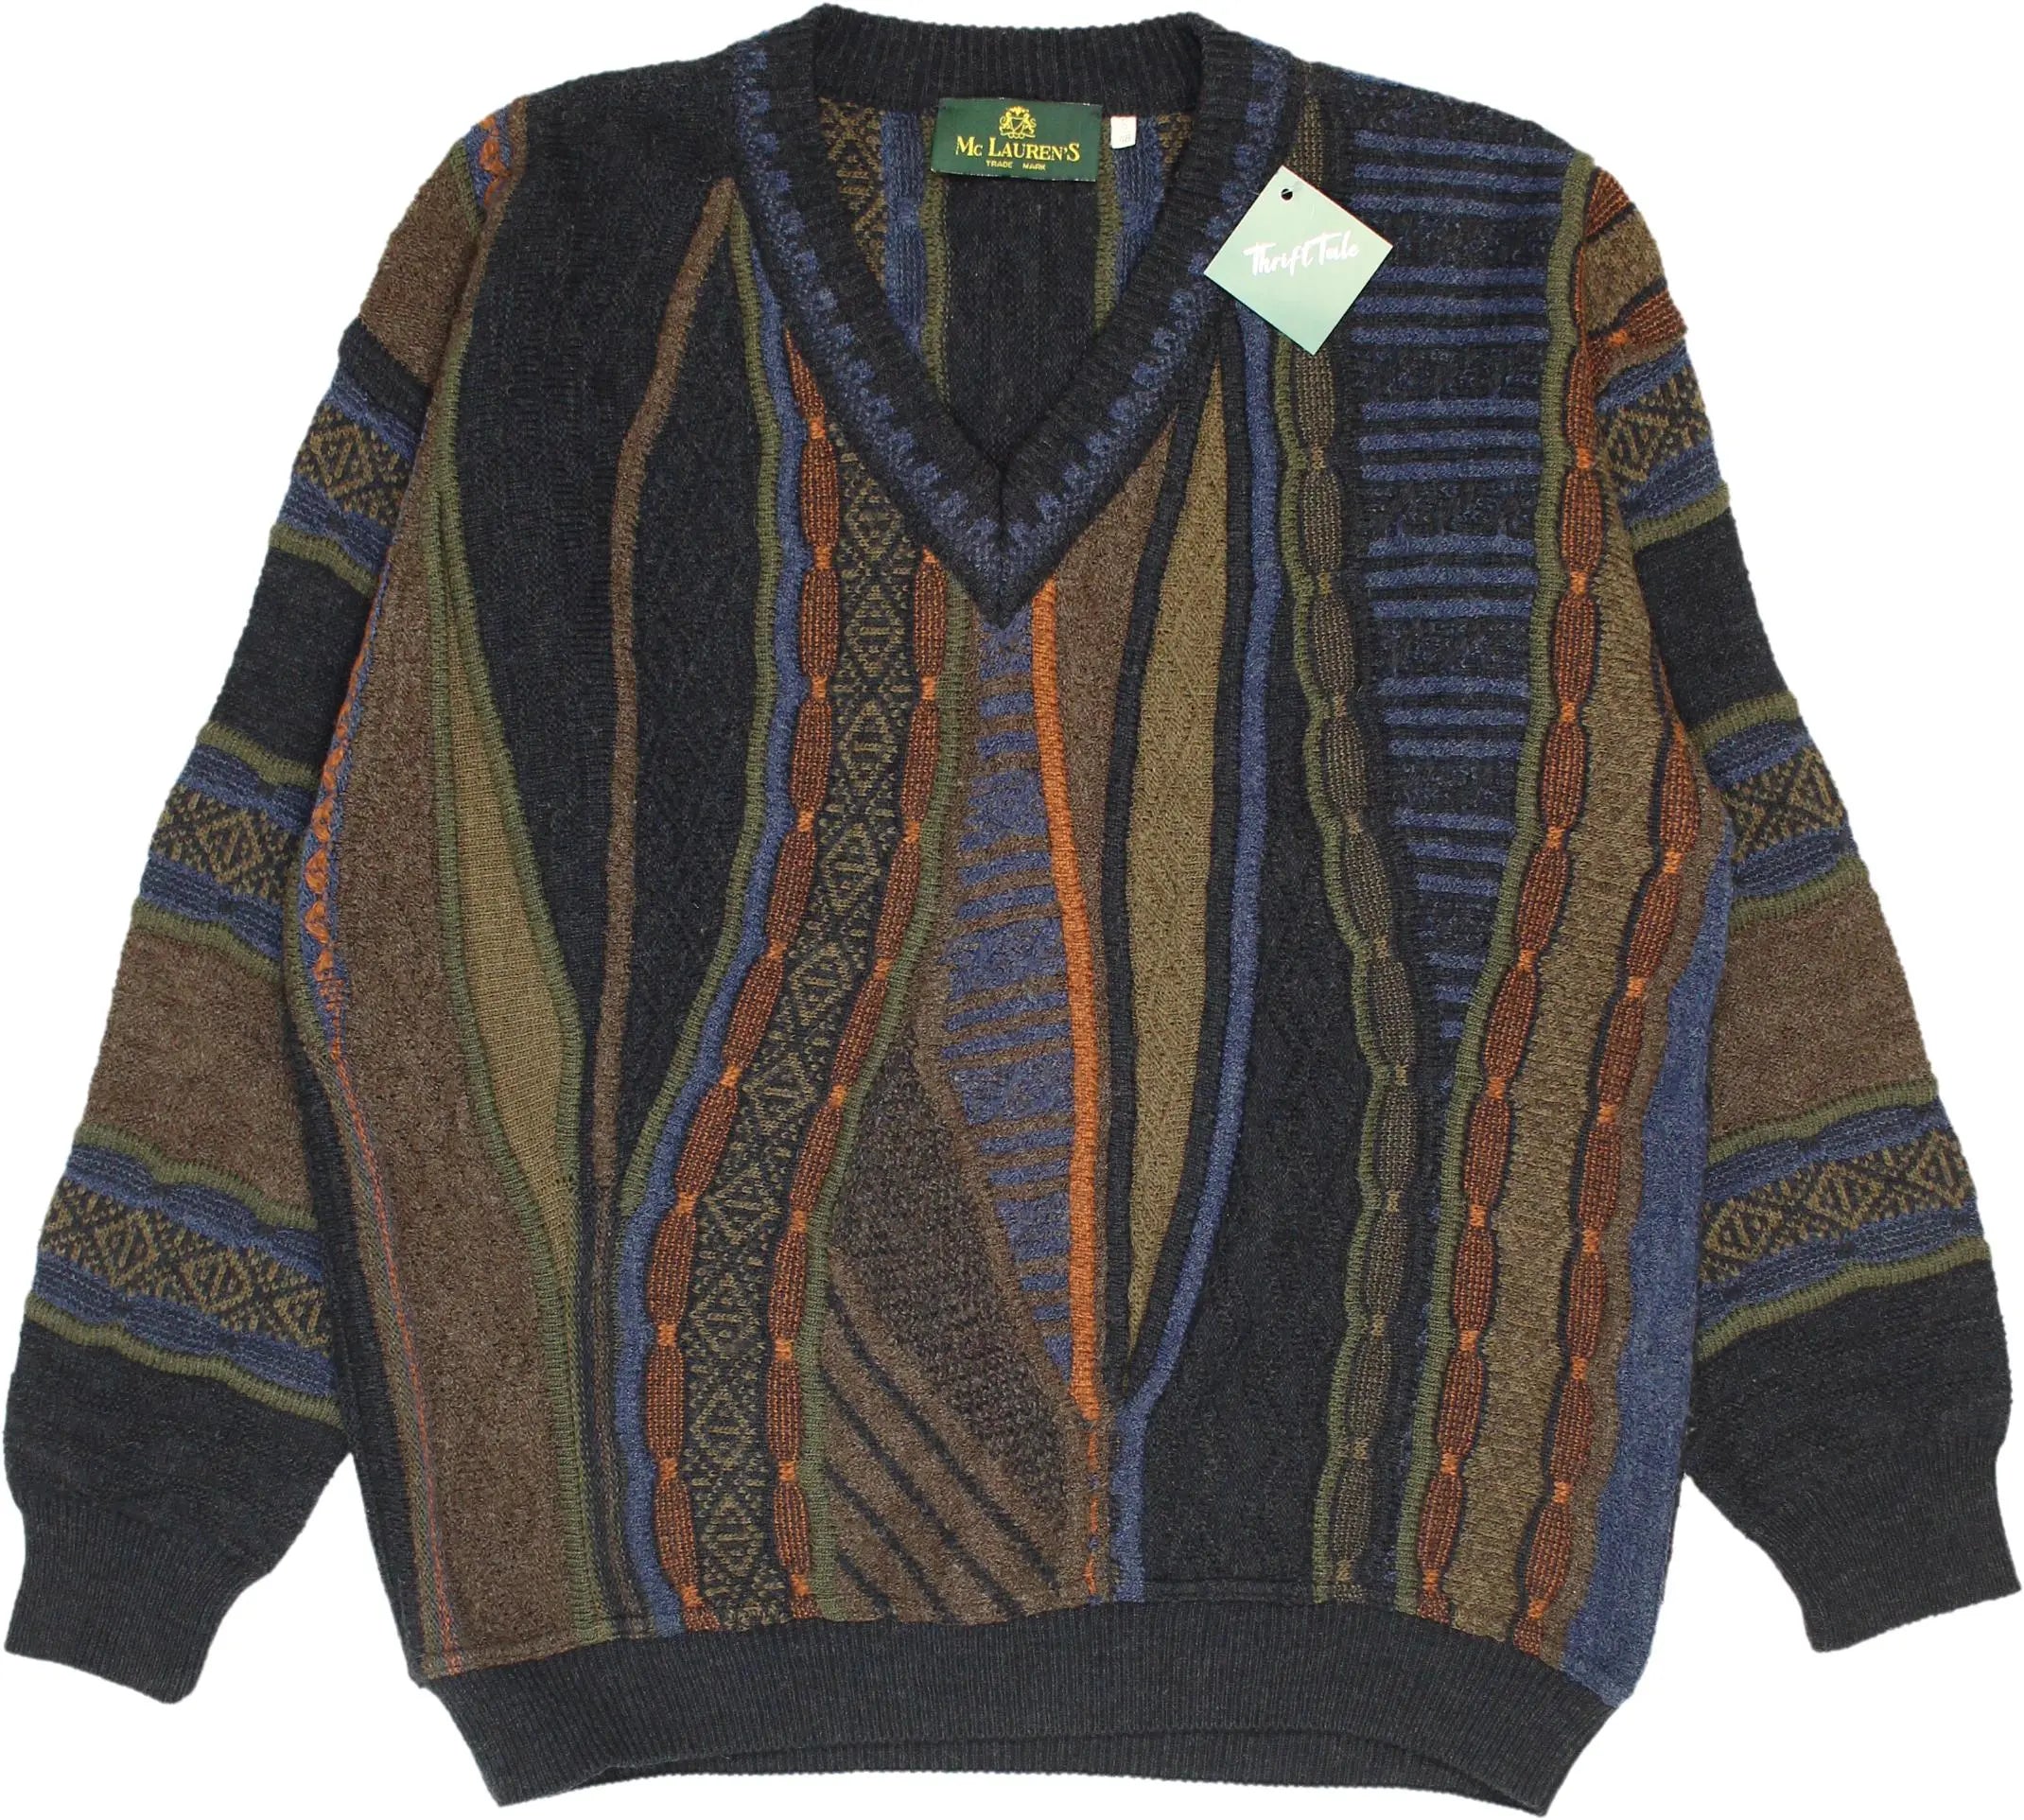 Mc Lauren's - 90s Wool Blend Patterned Jumper- ThriftTale.com - Vintage and second handclothing